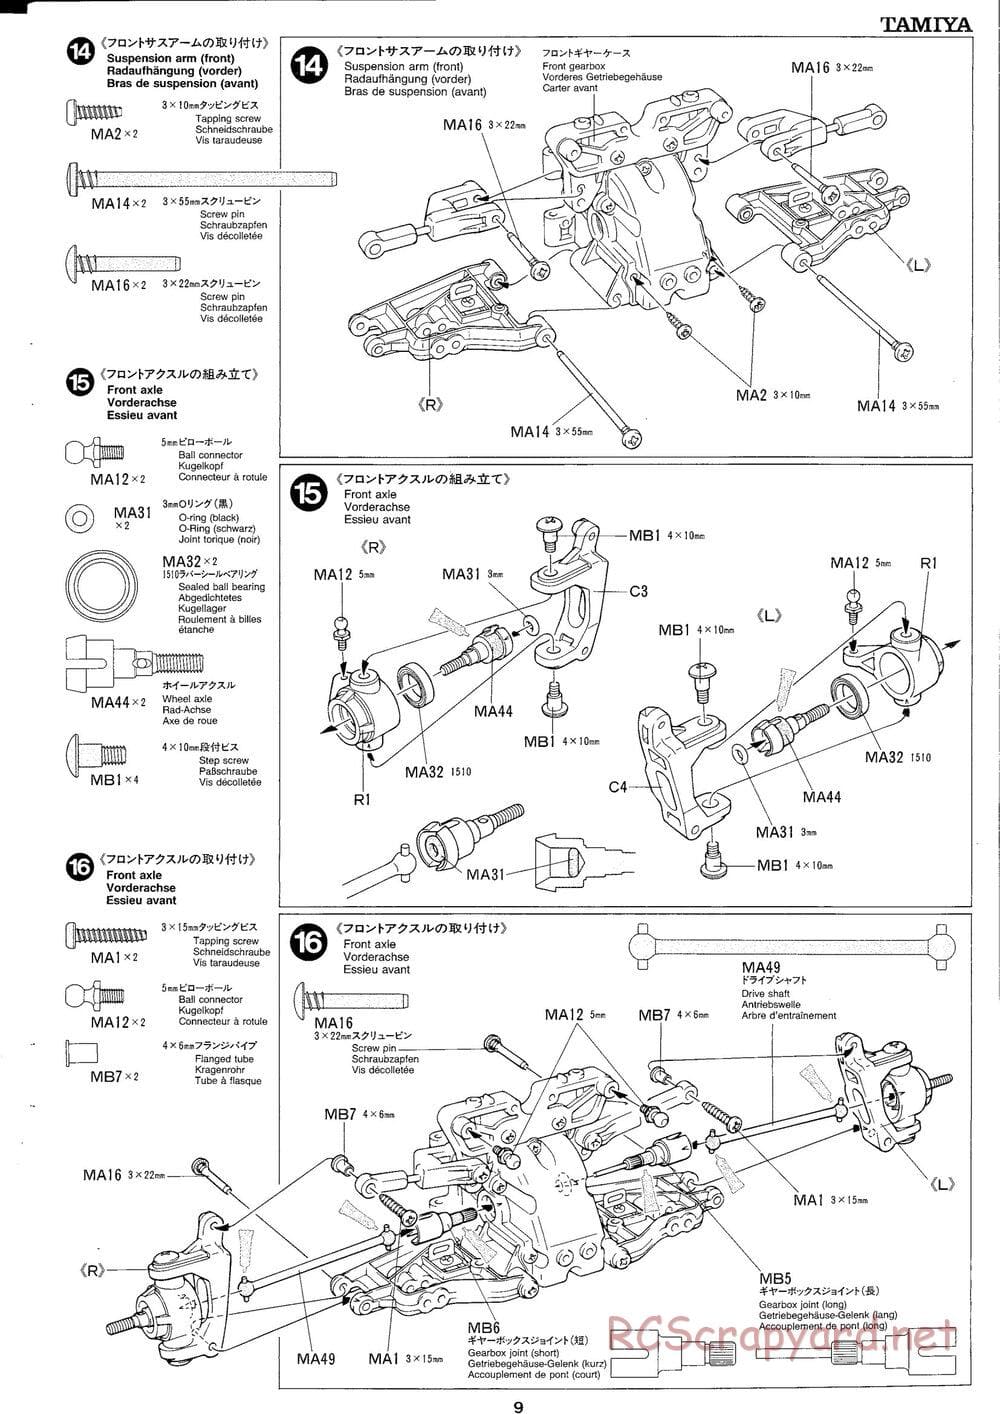 Tamiya - TGX Mk.1 TRF Special Chassis - Manual - Page 9